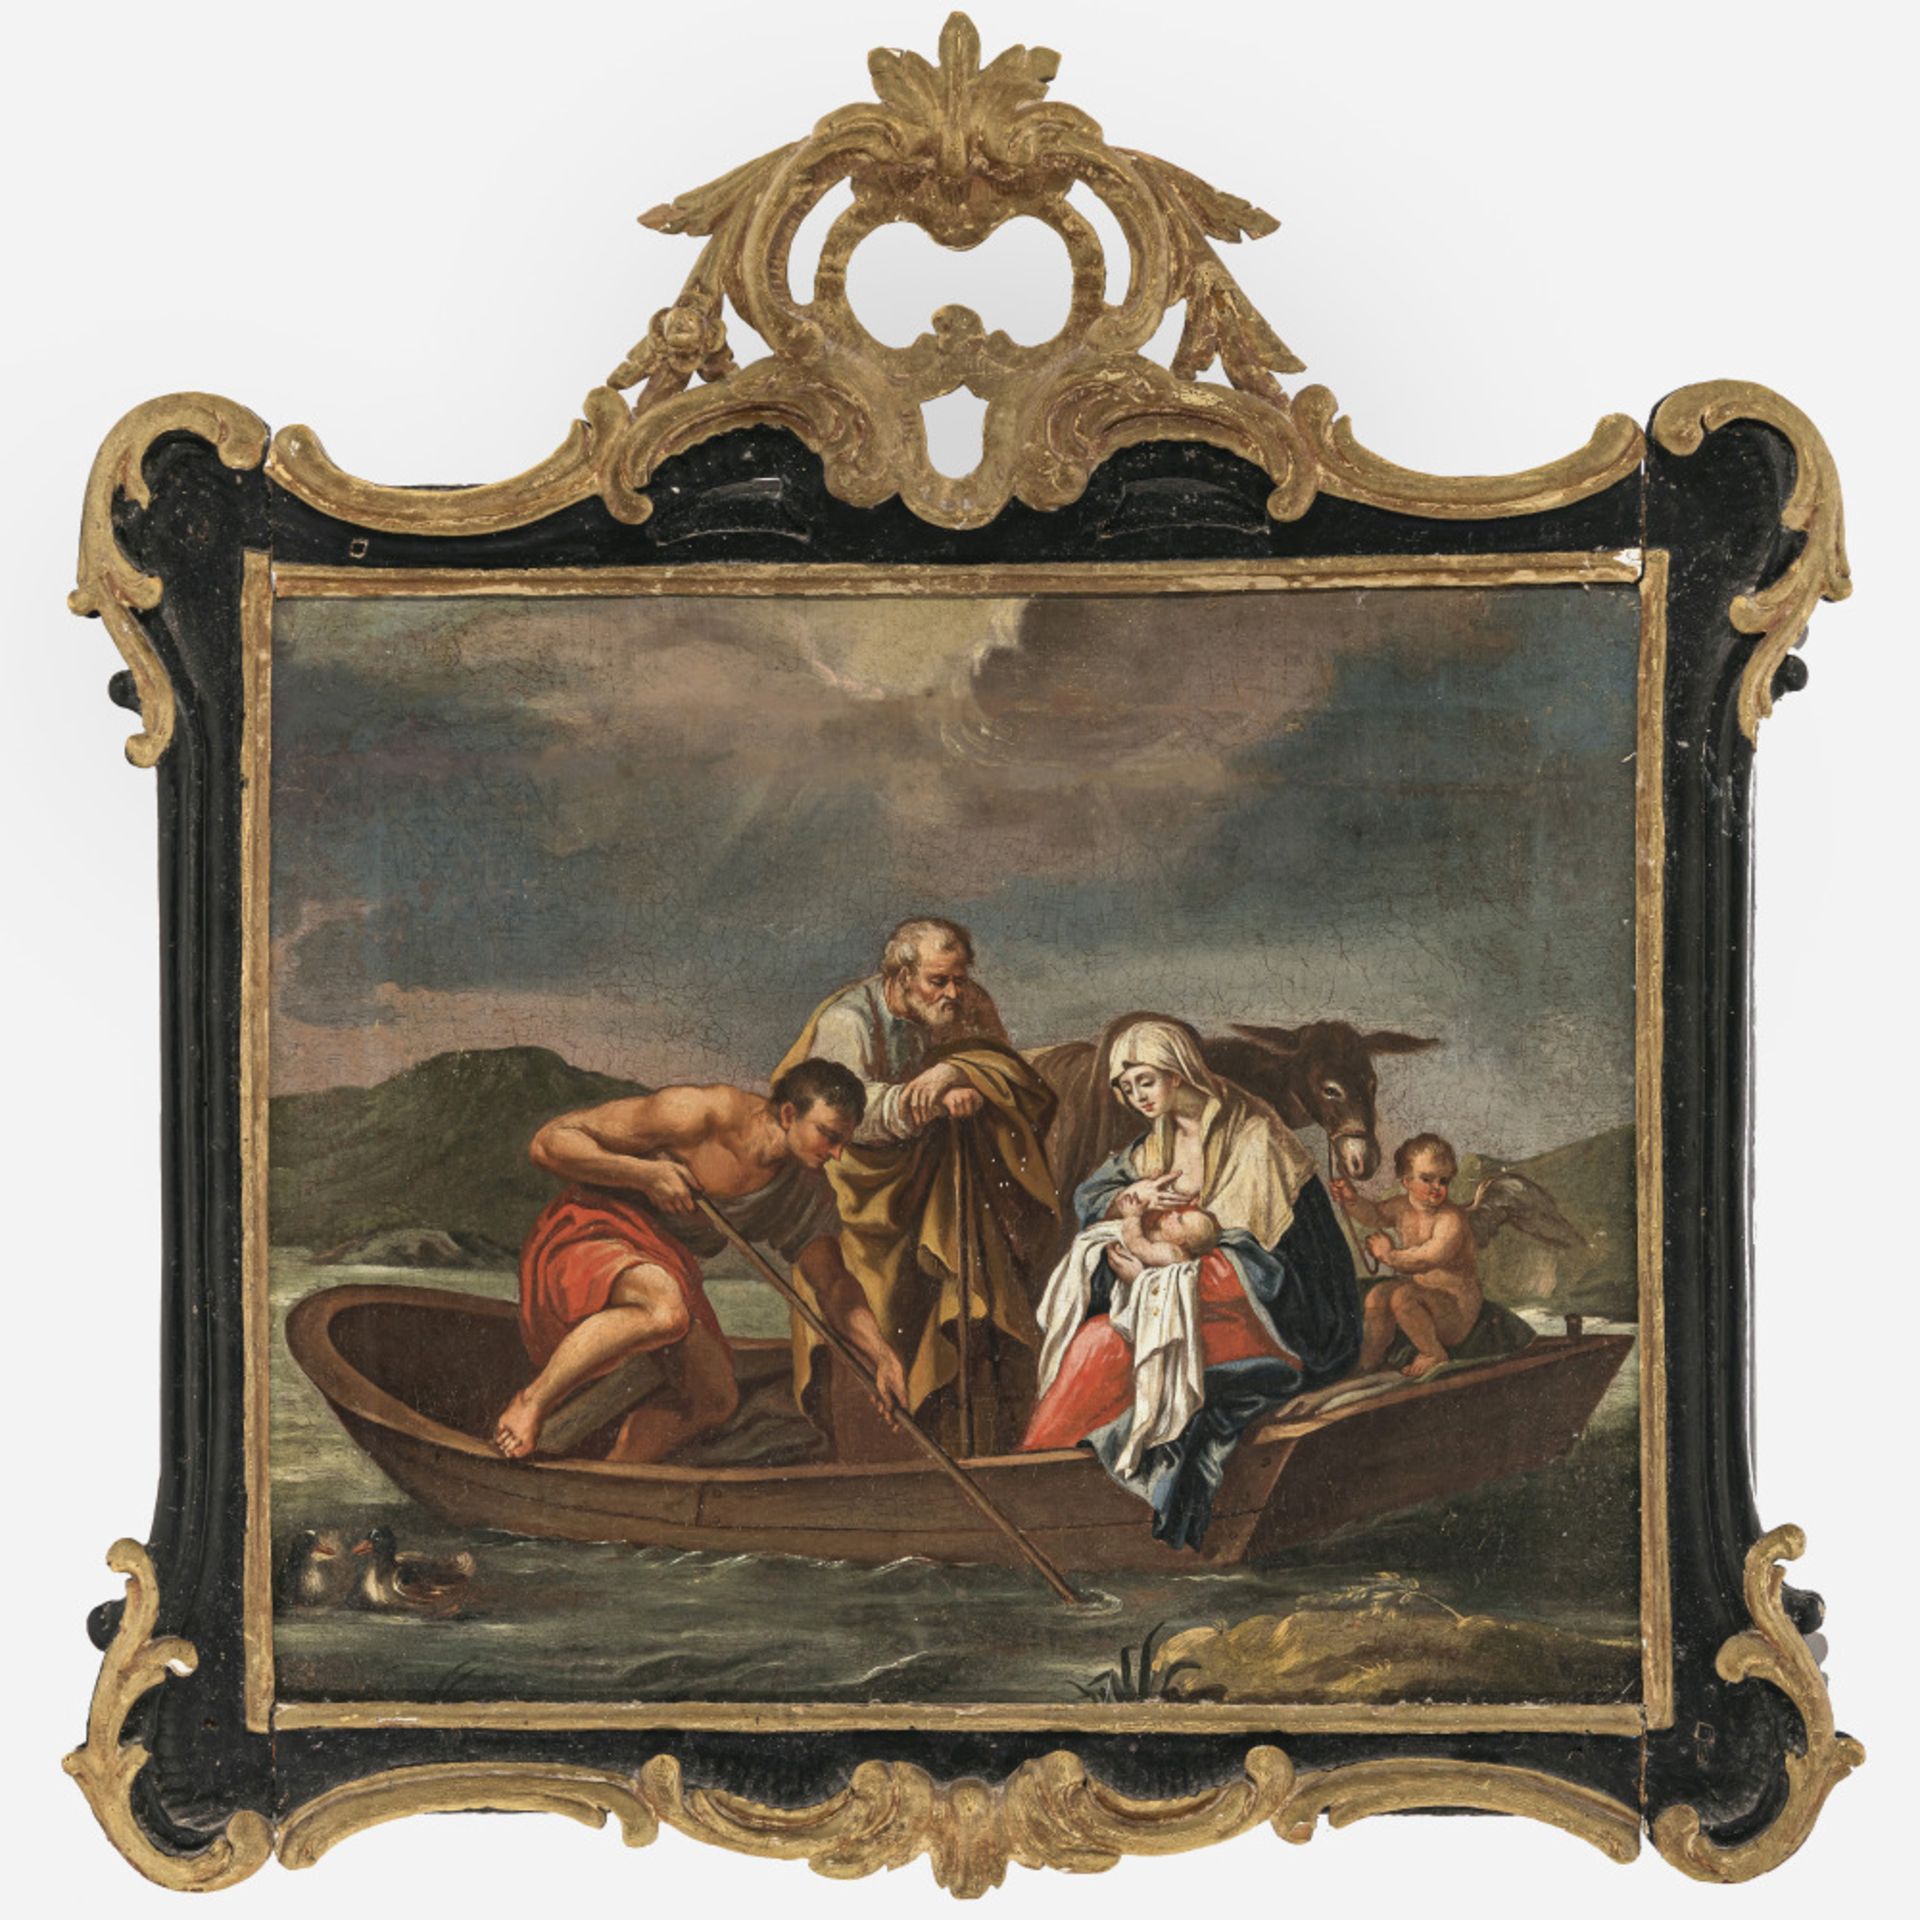 Unbekannt 18th century - Holy Family on the Flight into Egypt